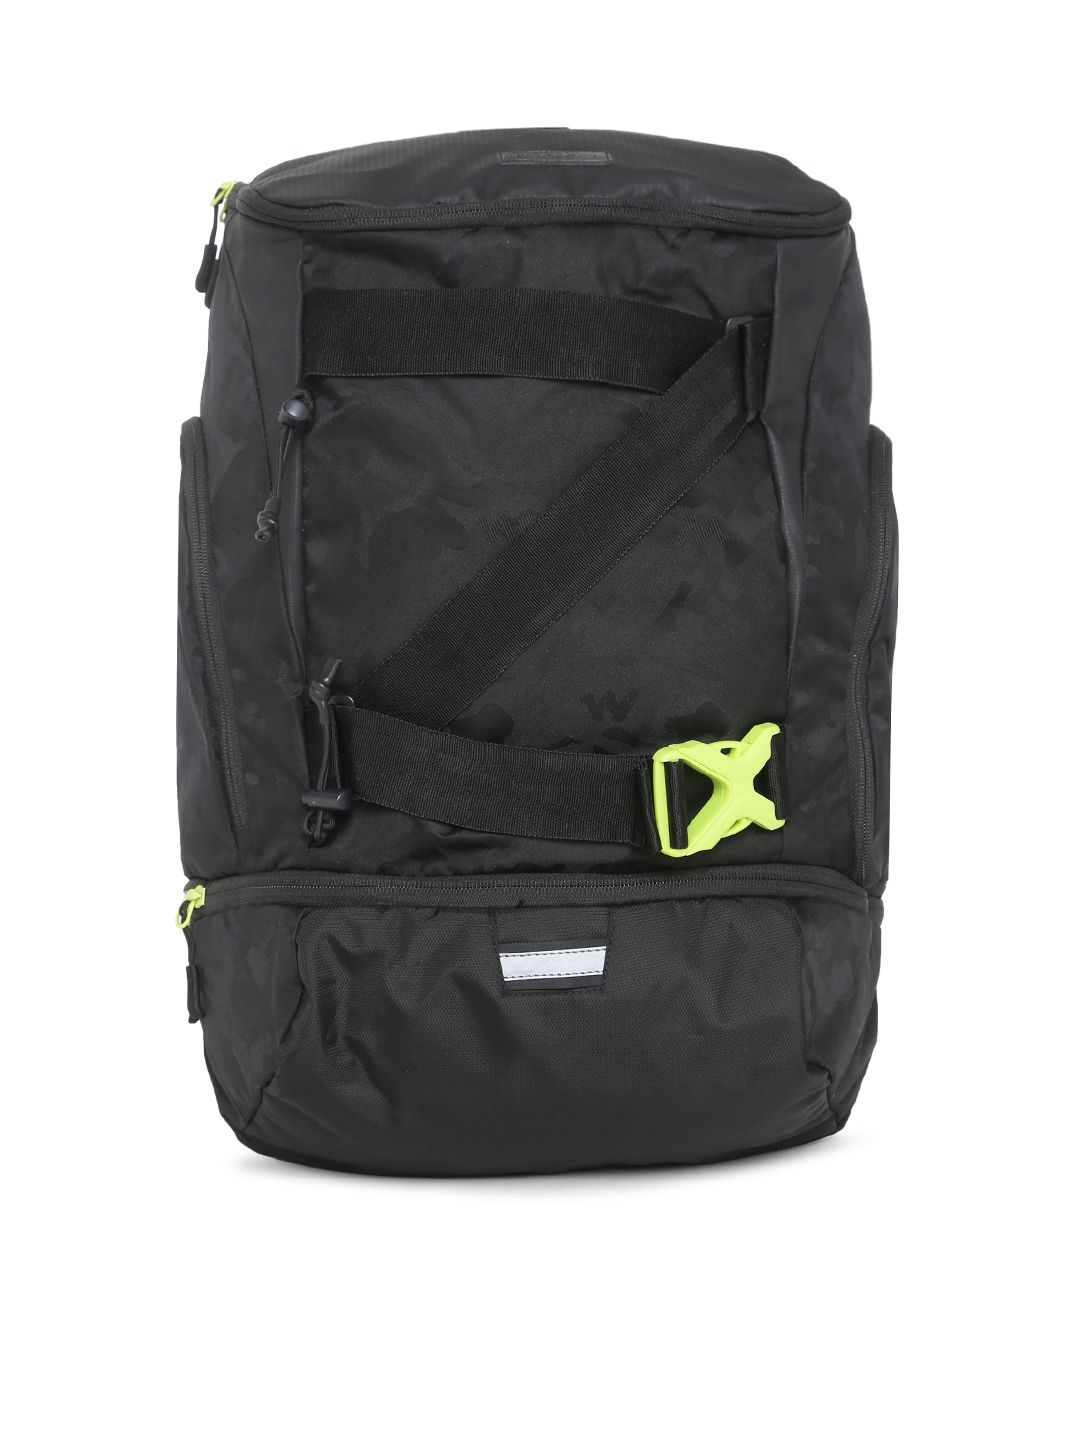 Wildcraft Unisex Black Solid Backpack Price in India